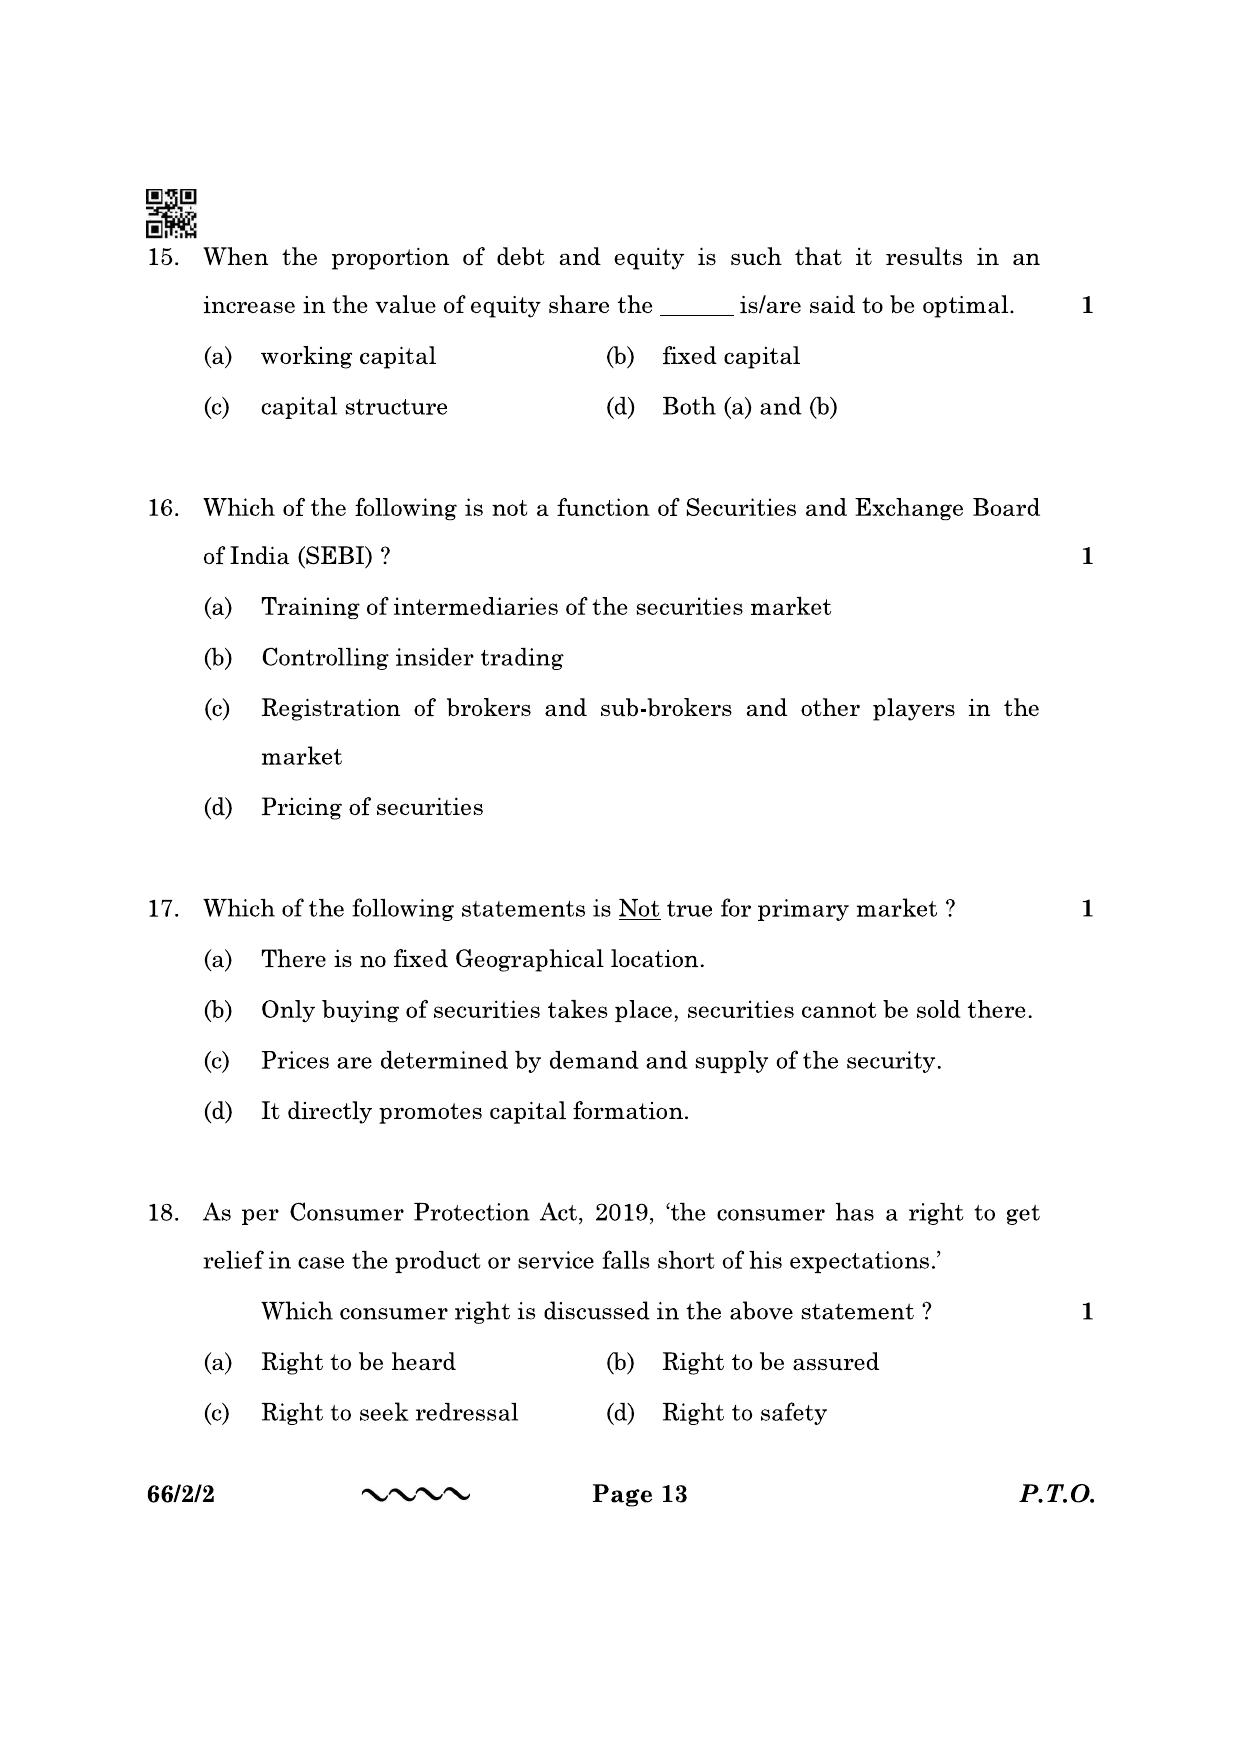 CBSE Class 12 66-2-2 Business Studies 2023 Question Paper - Page 13